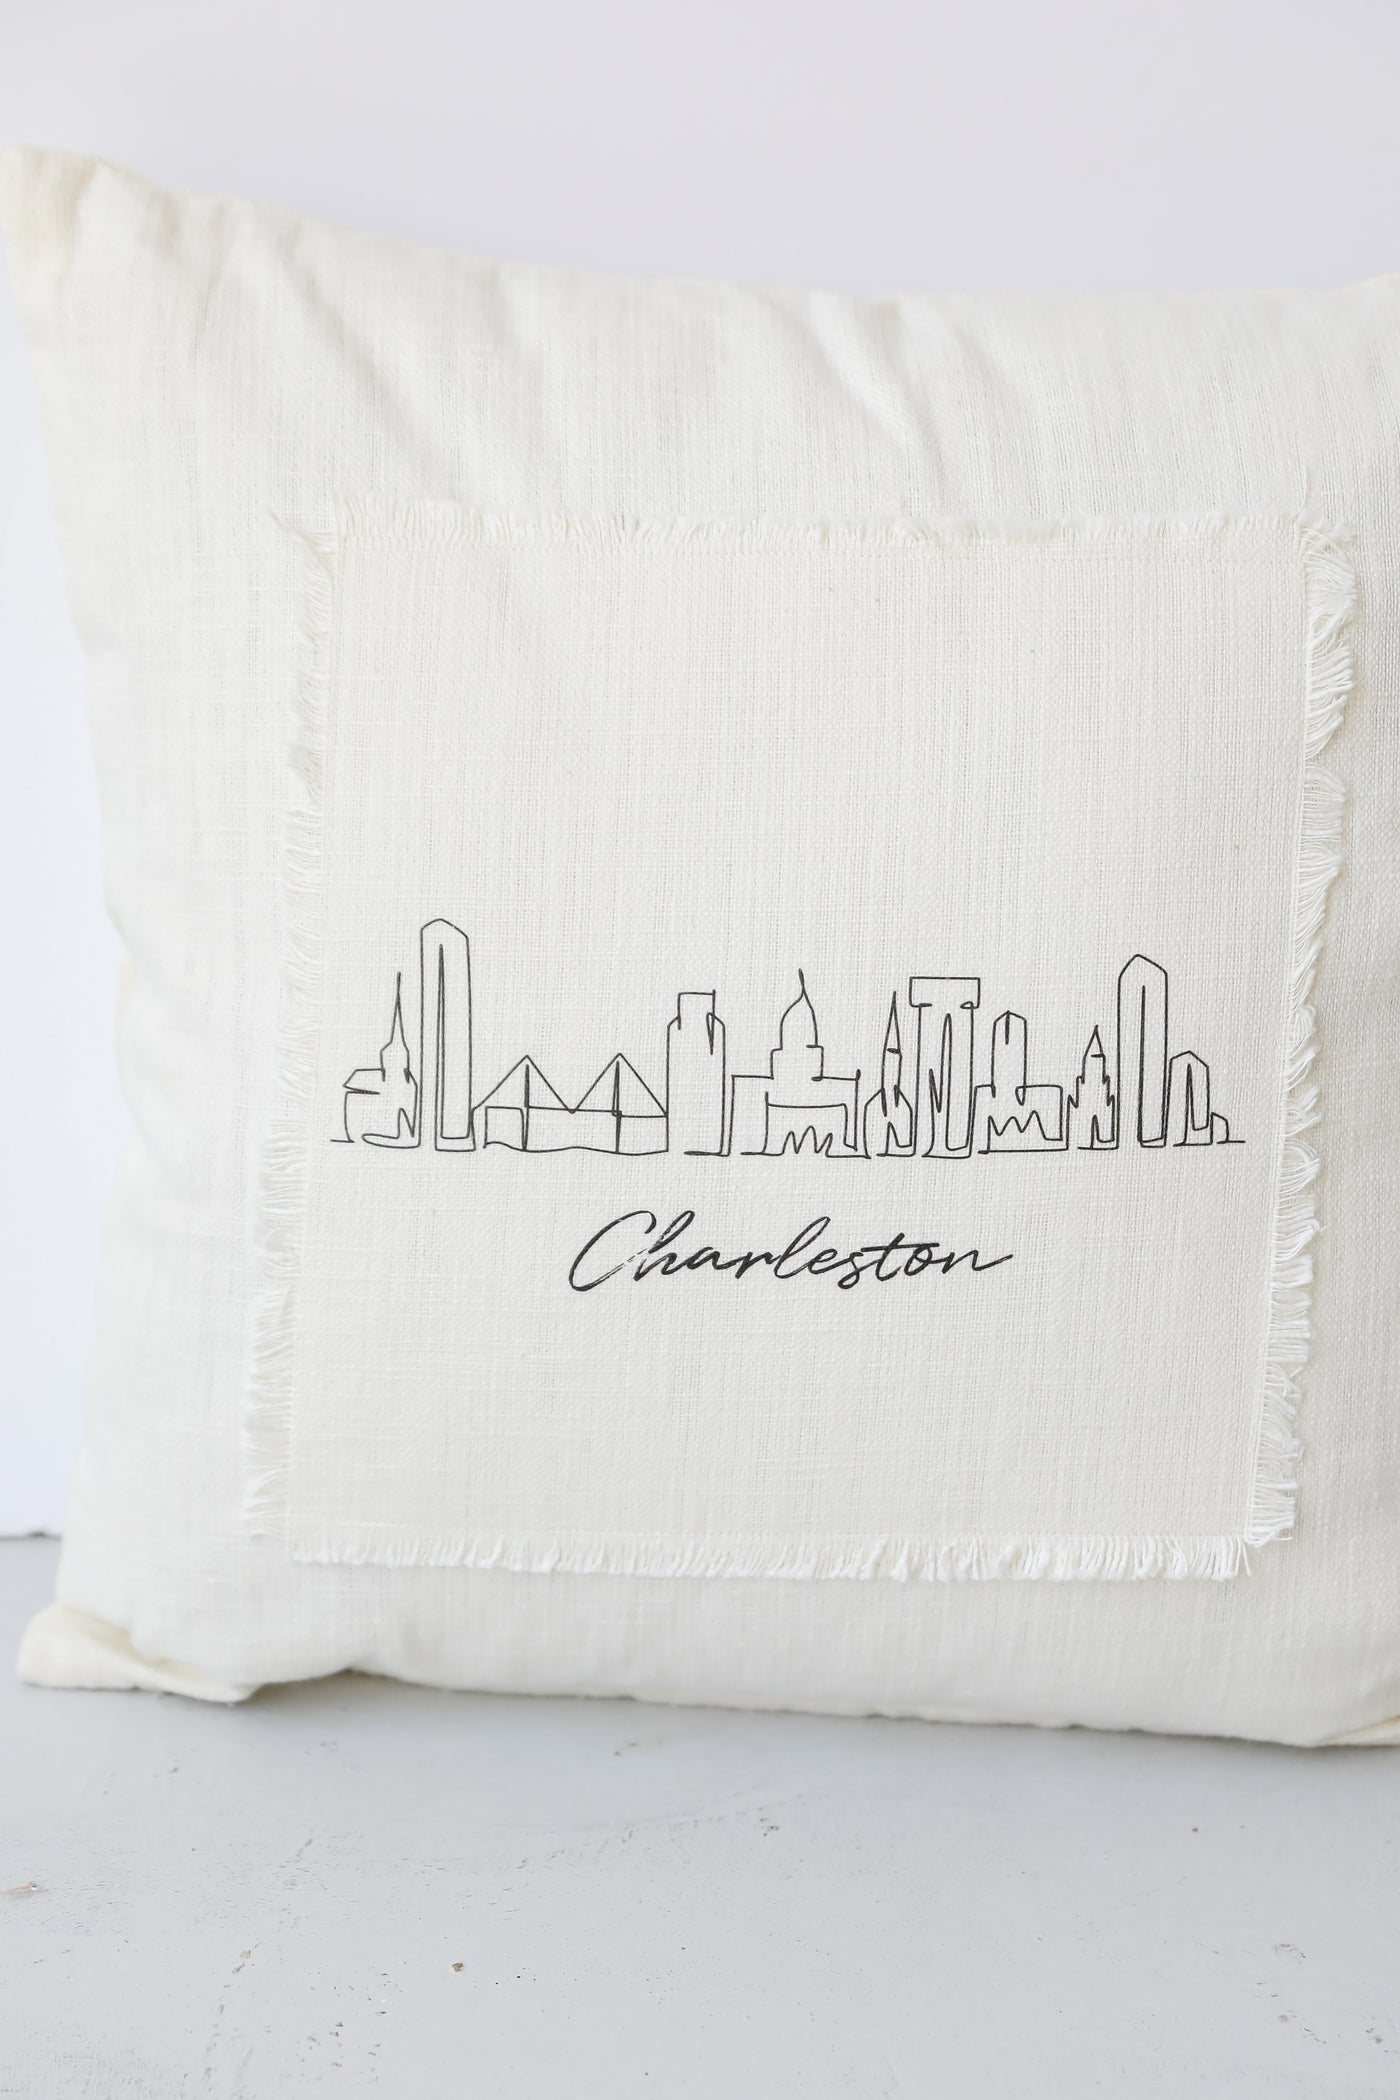 Charleston City Scape Pillow close up